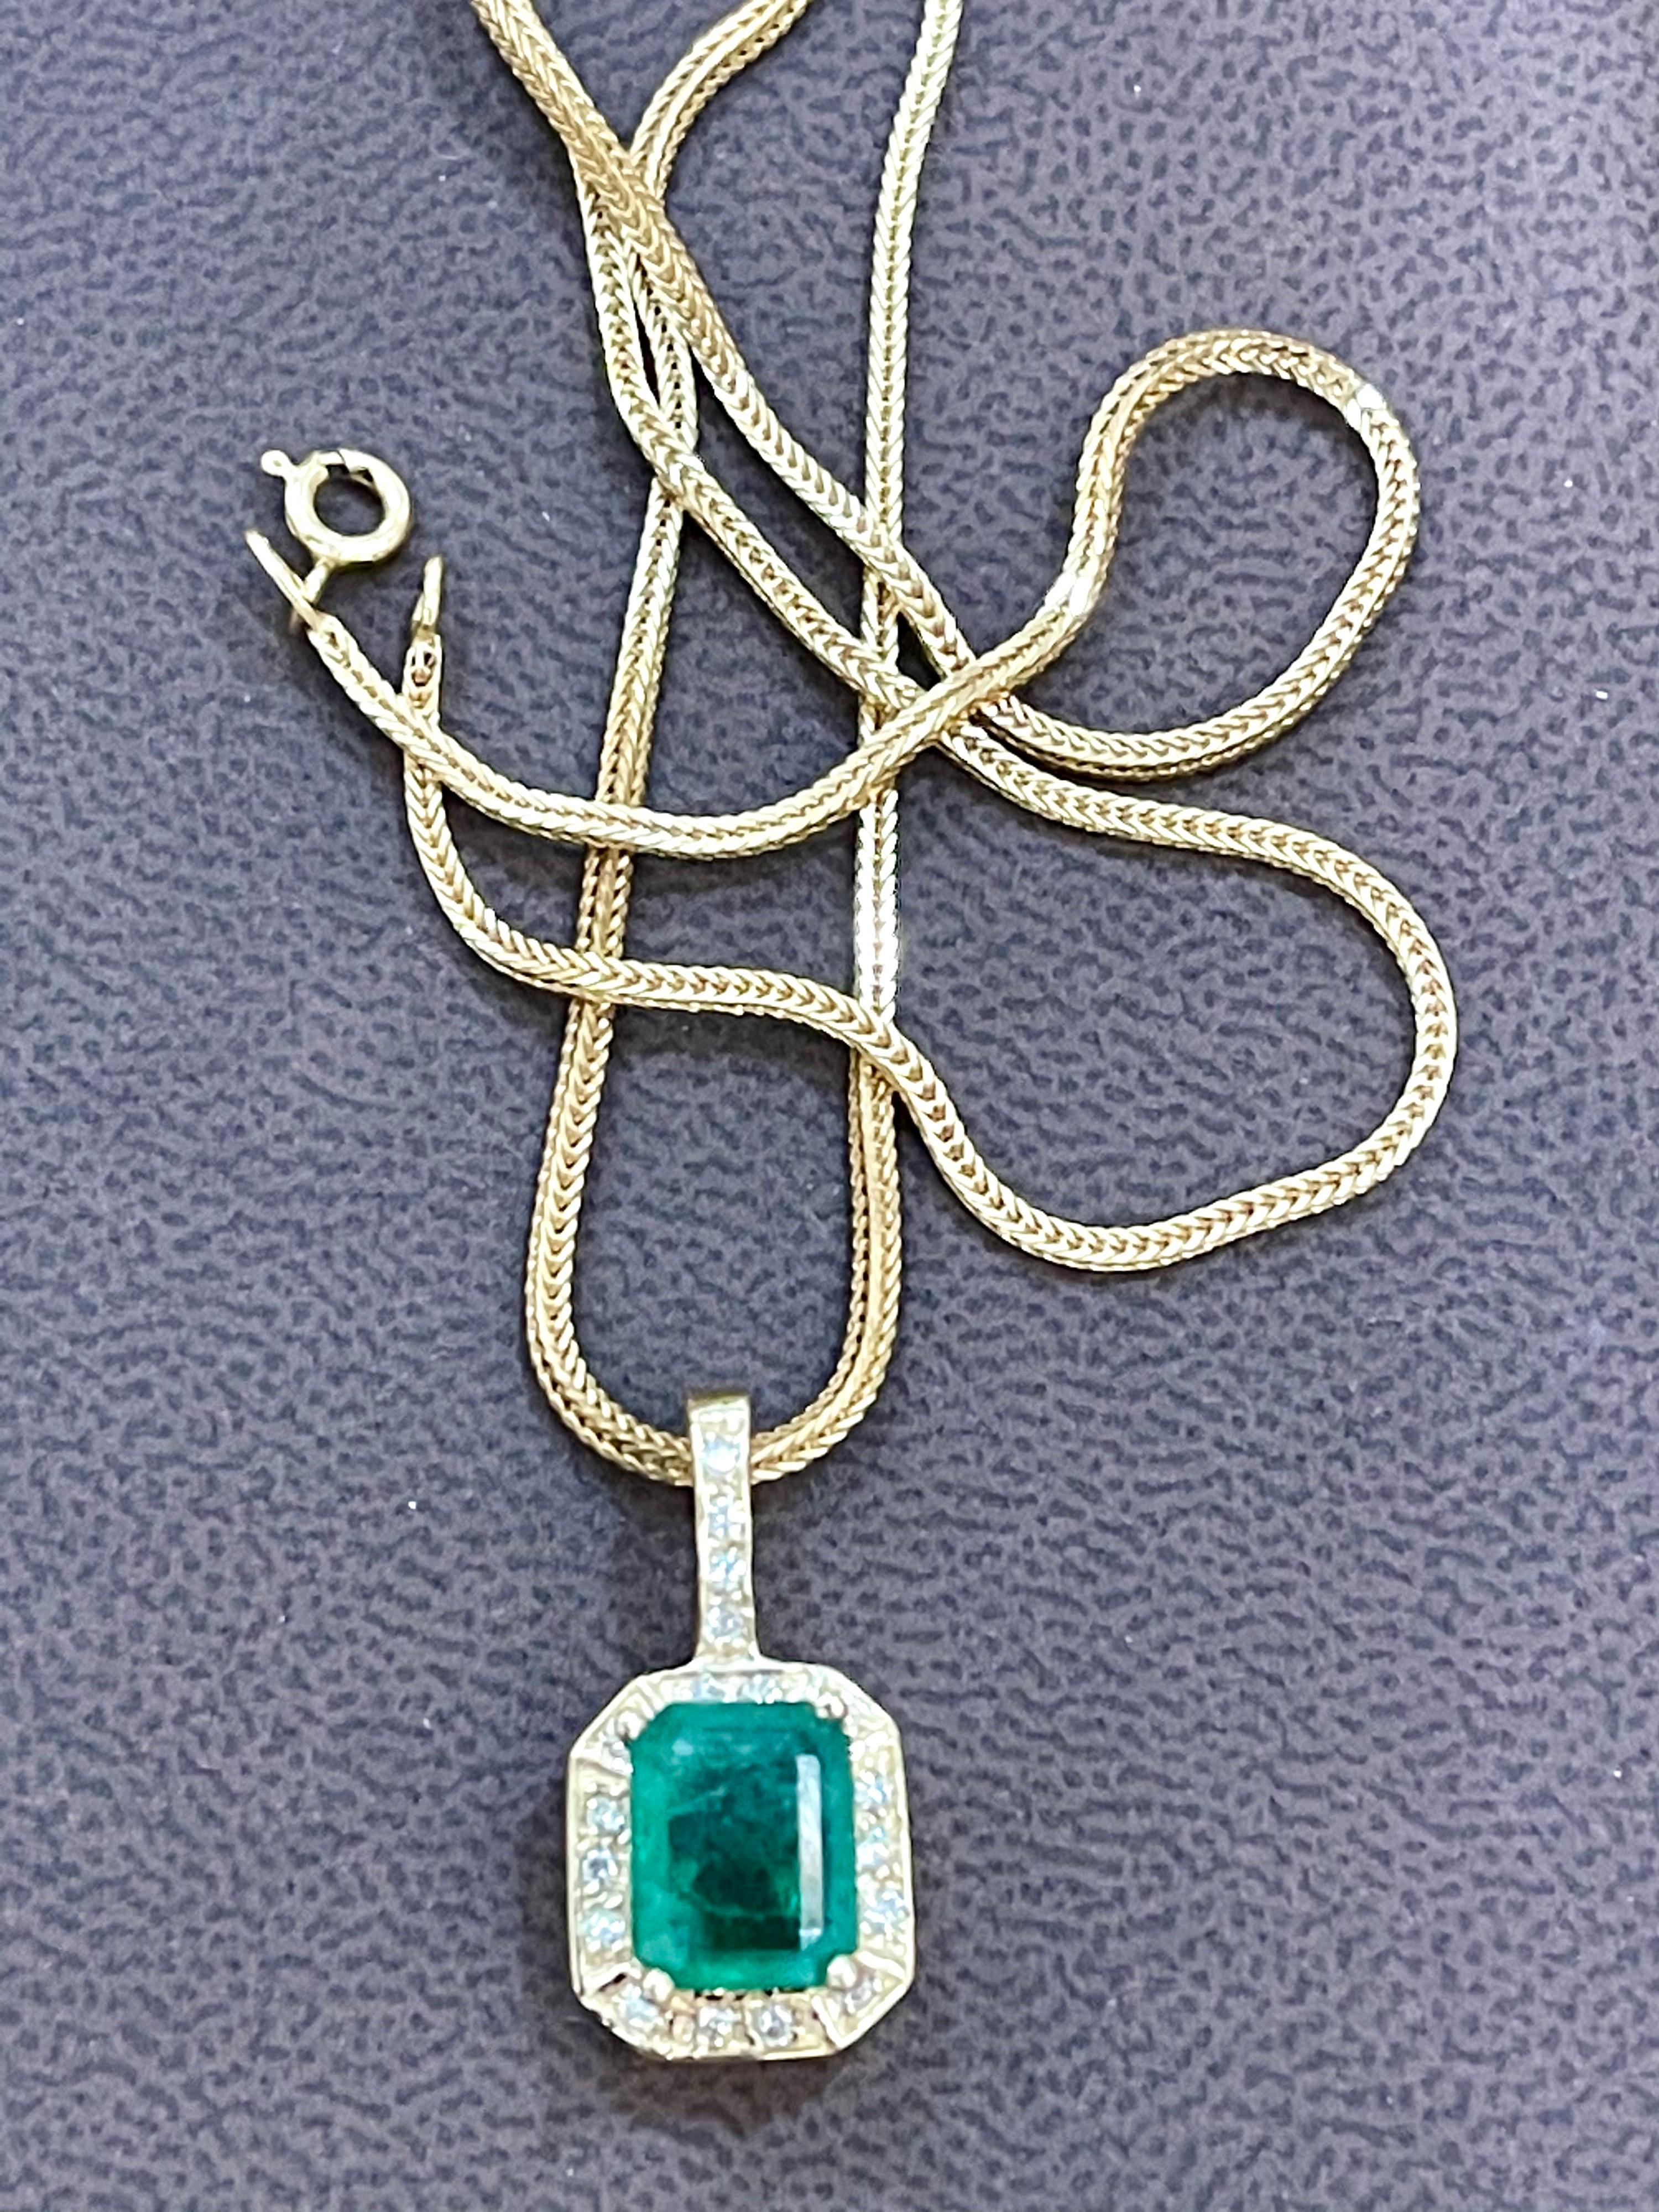 3 Ct Natural Emerald Cut Emerald & Diamond Pendant 14 Karat Yellow Gold Chain 10